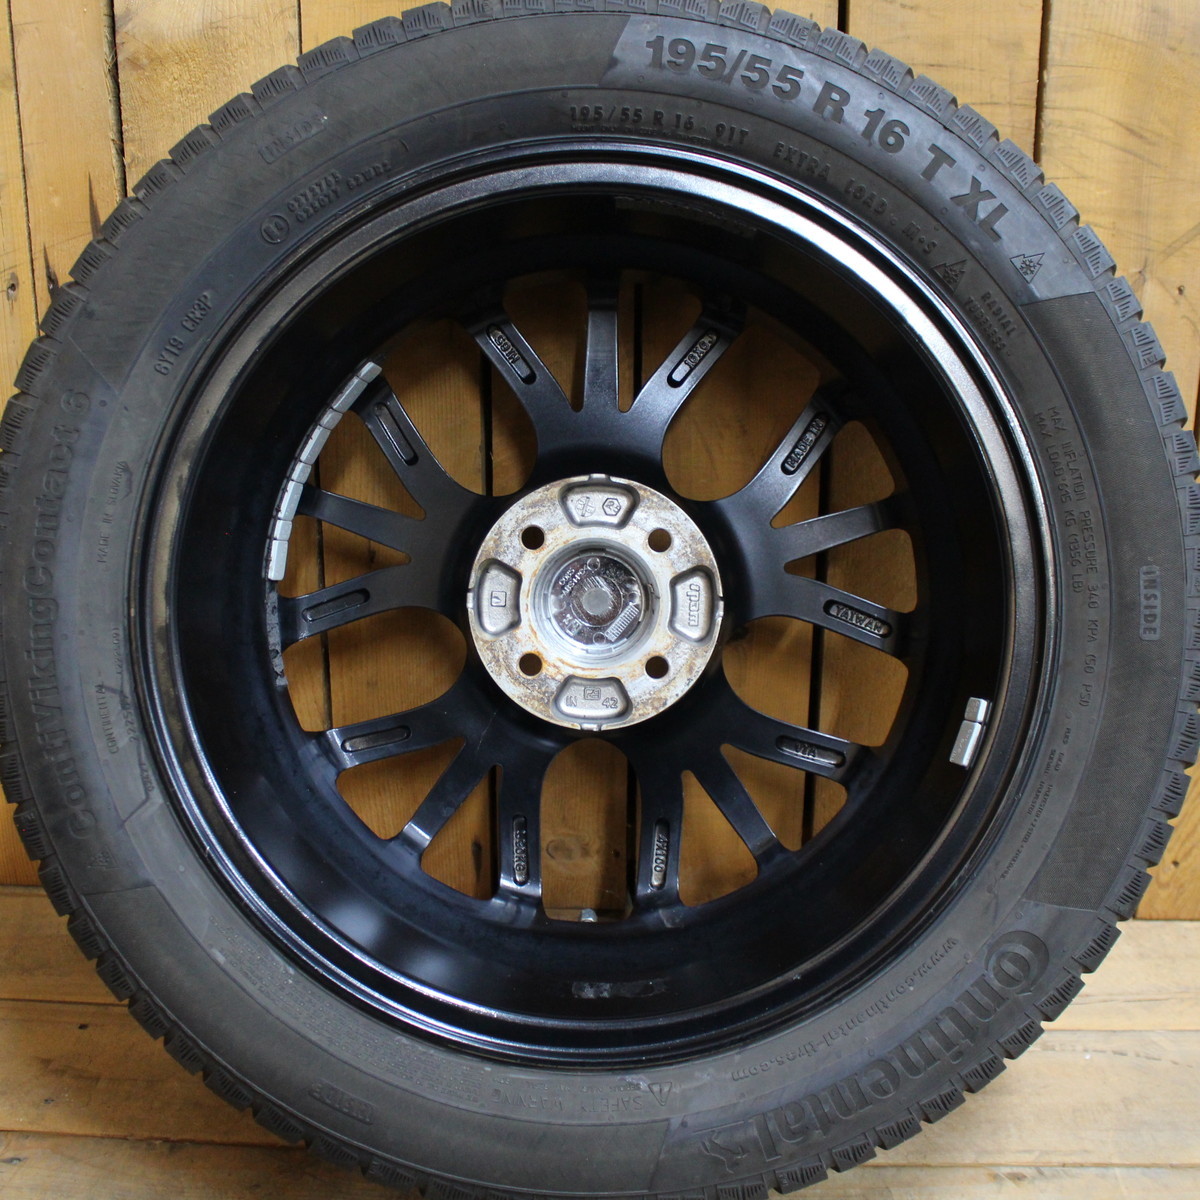  Note March Fielder Tiida Wingroad etc. 16 -inch weds Leonis studdless tires 195/55R16 aluminium wheel 4ps.@SET